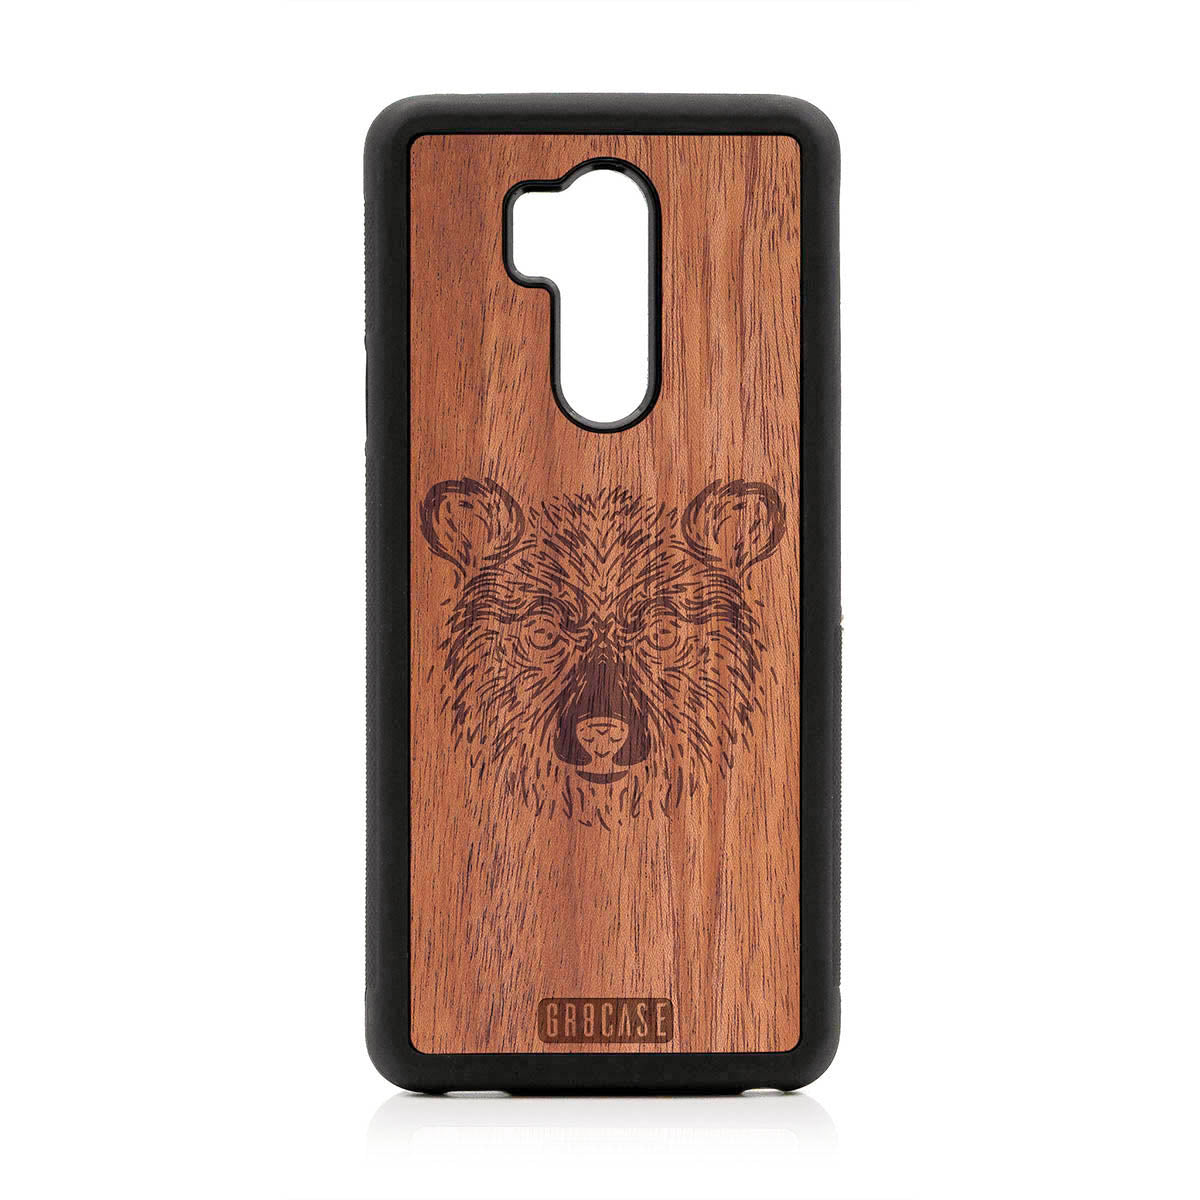 Furry Bear Design Wood Case For LG G7 ThinQ